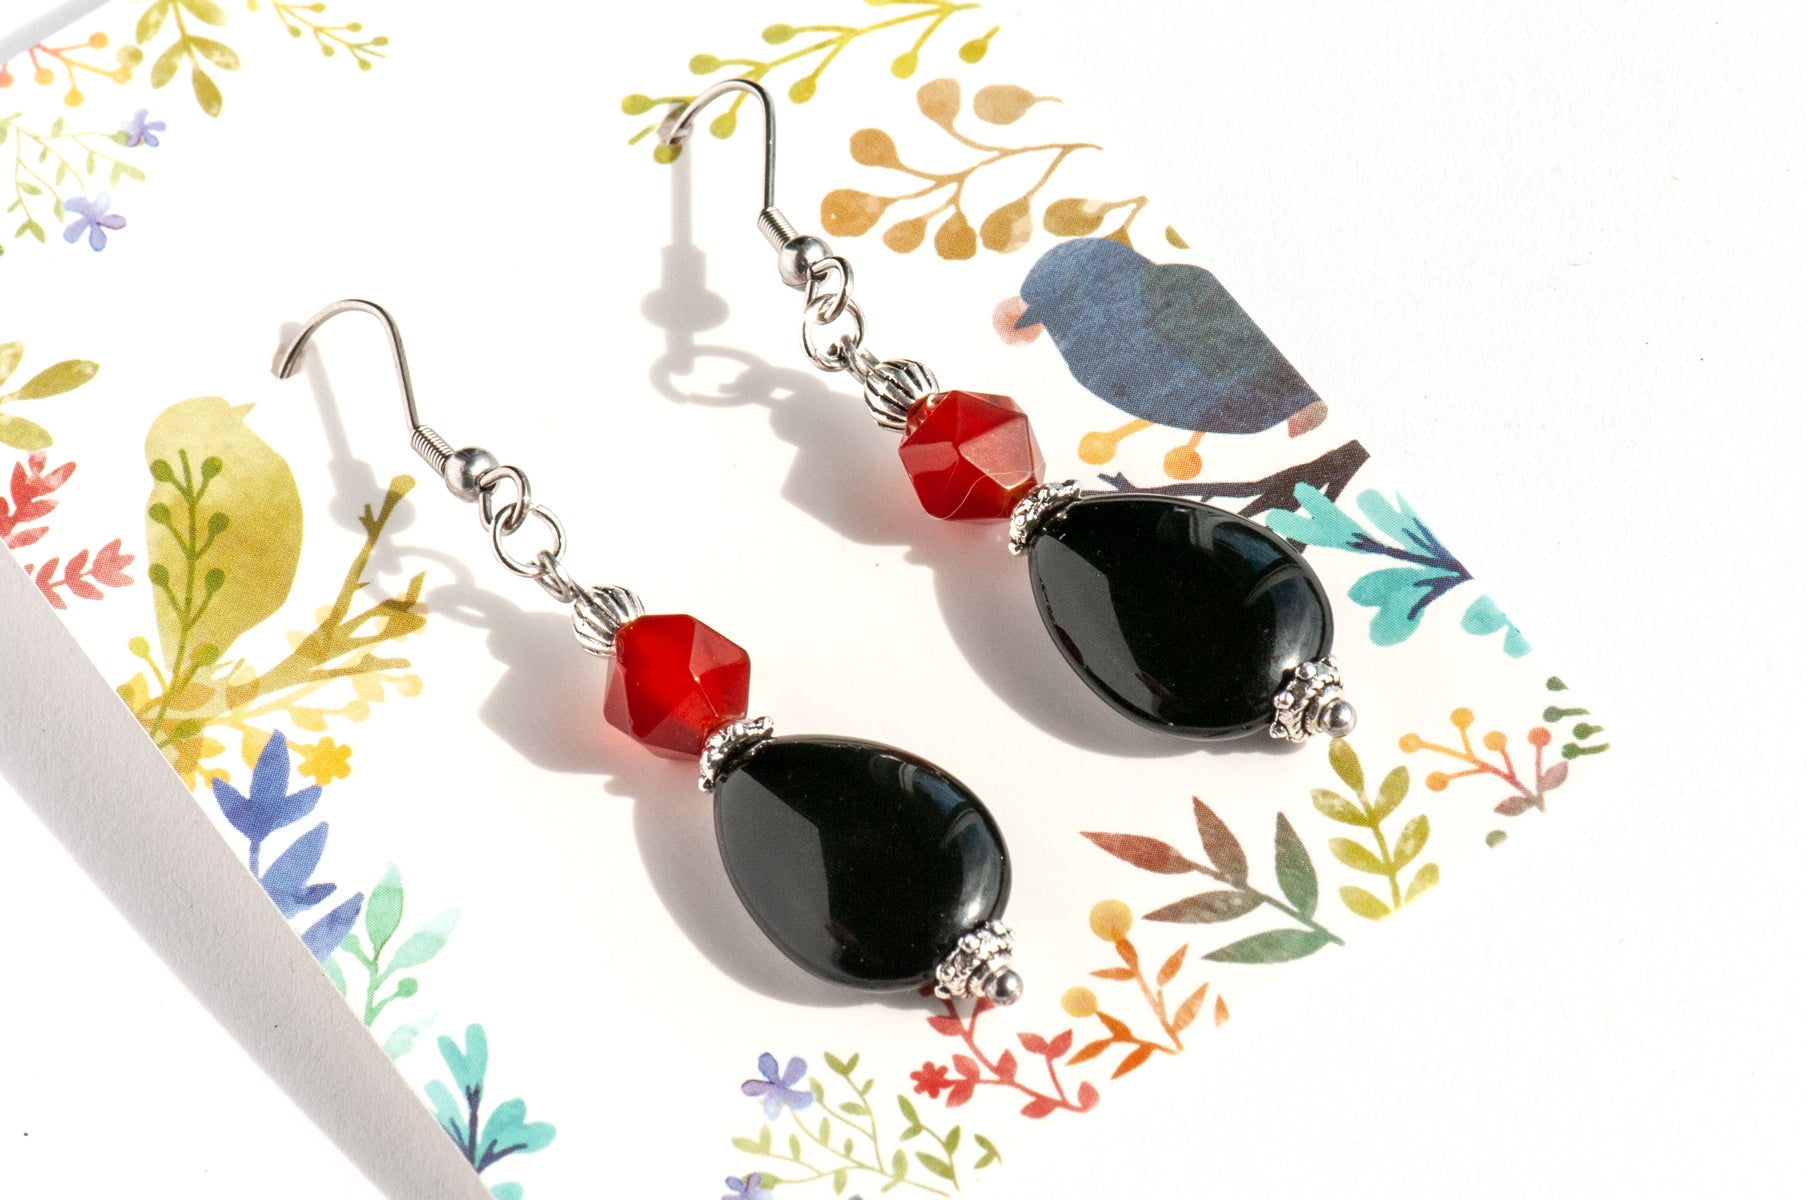 Handmade dangle earrings with red carnelian and black obsidian gemstones